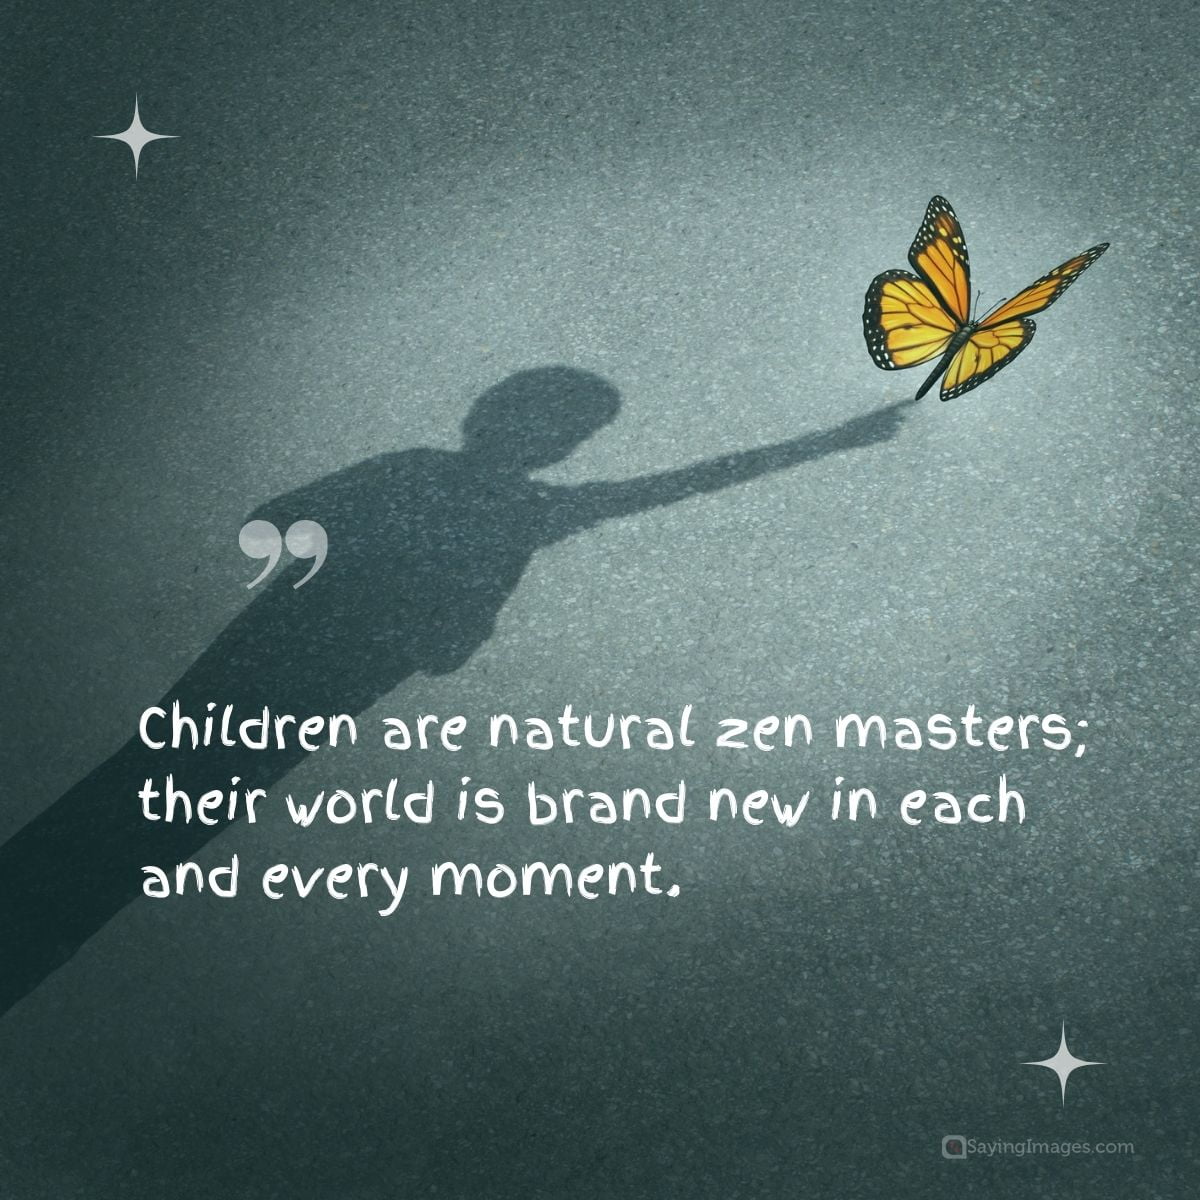 Children are natural zen masters